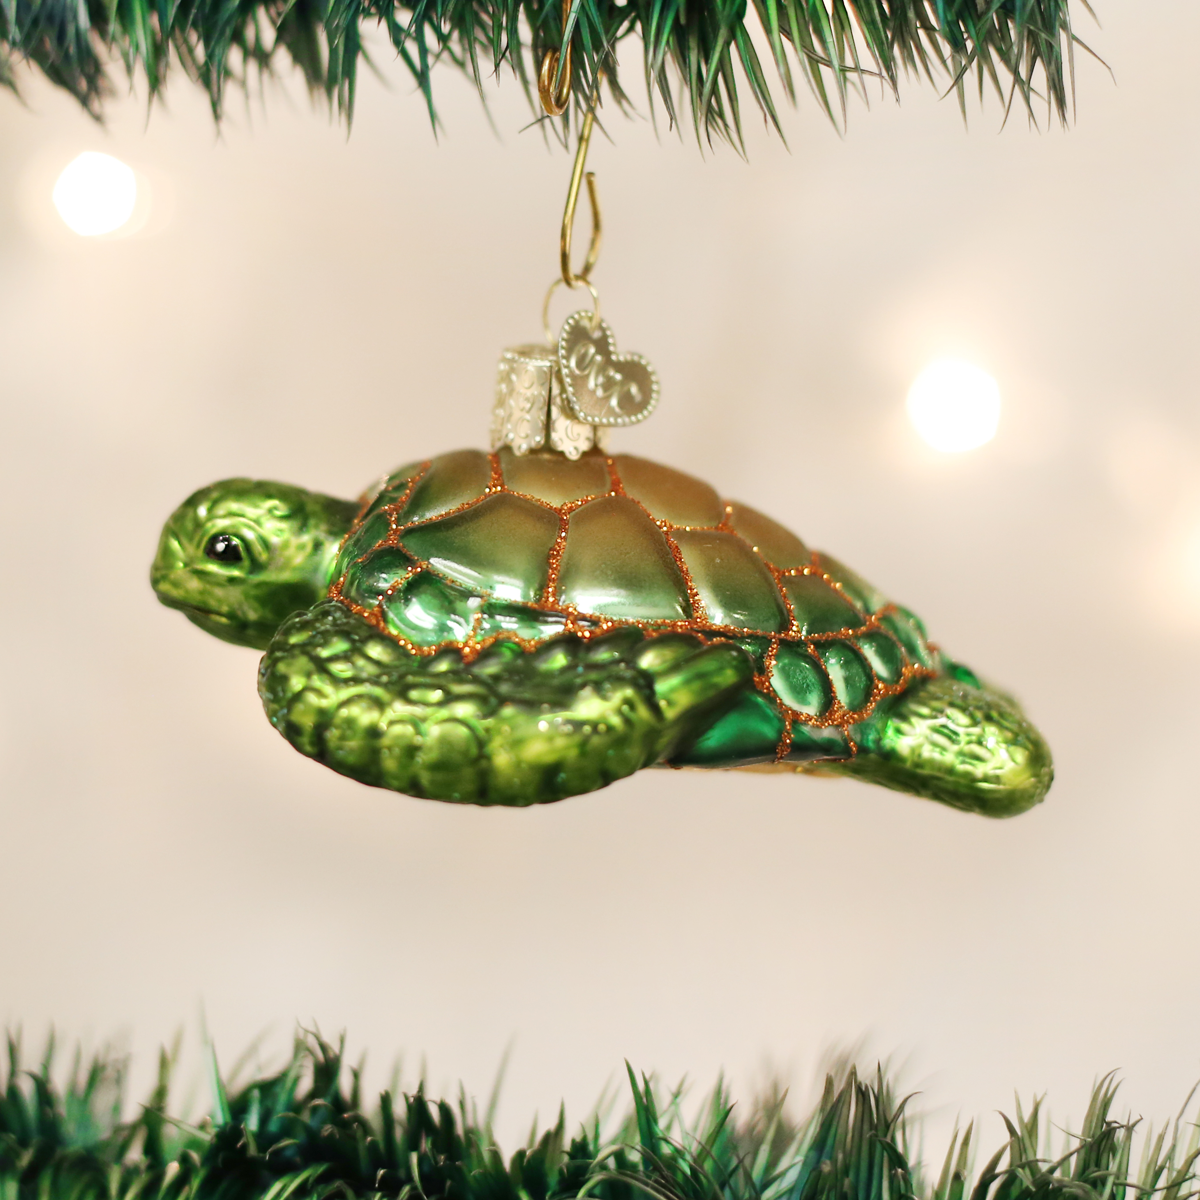 Old World Christmas - Green Sea Turtle Ornament    